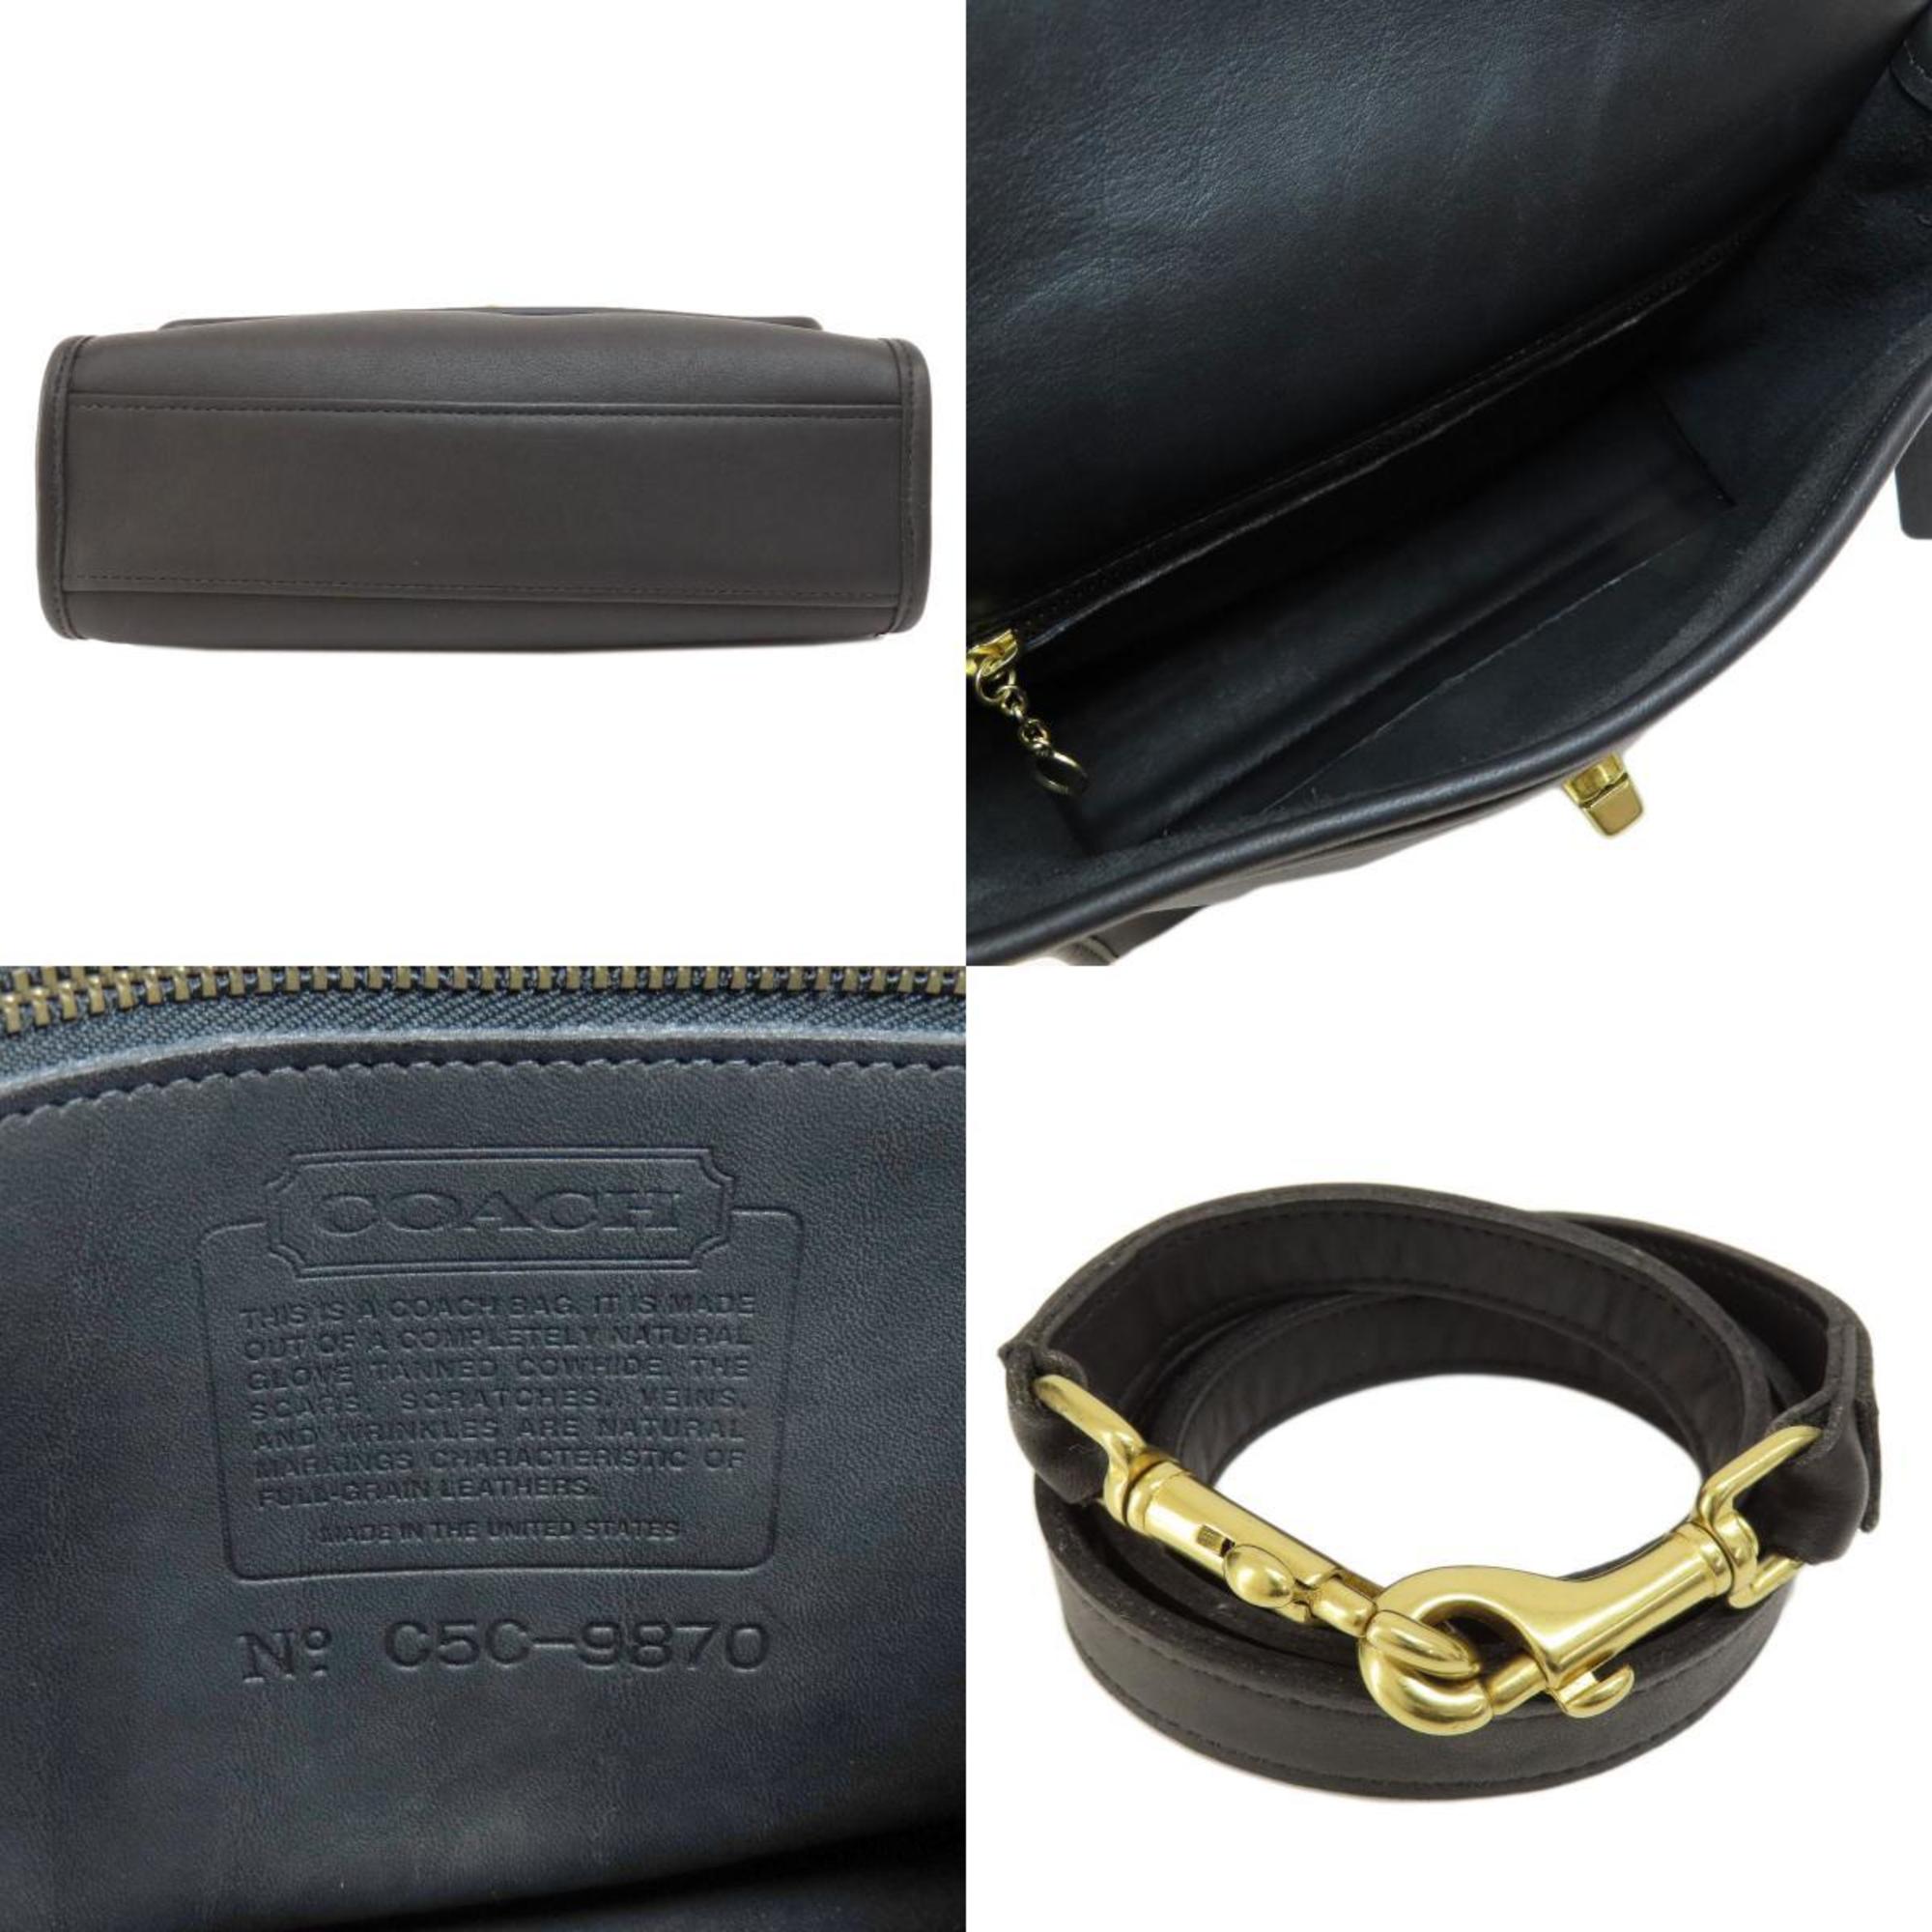 Coach 9870 USA made glovetanned leather handbag ladies COACH